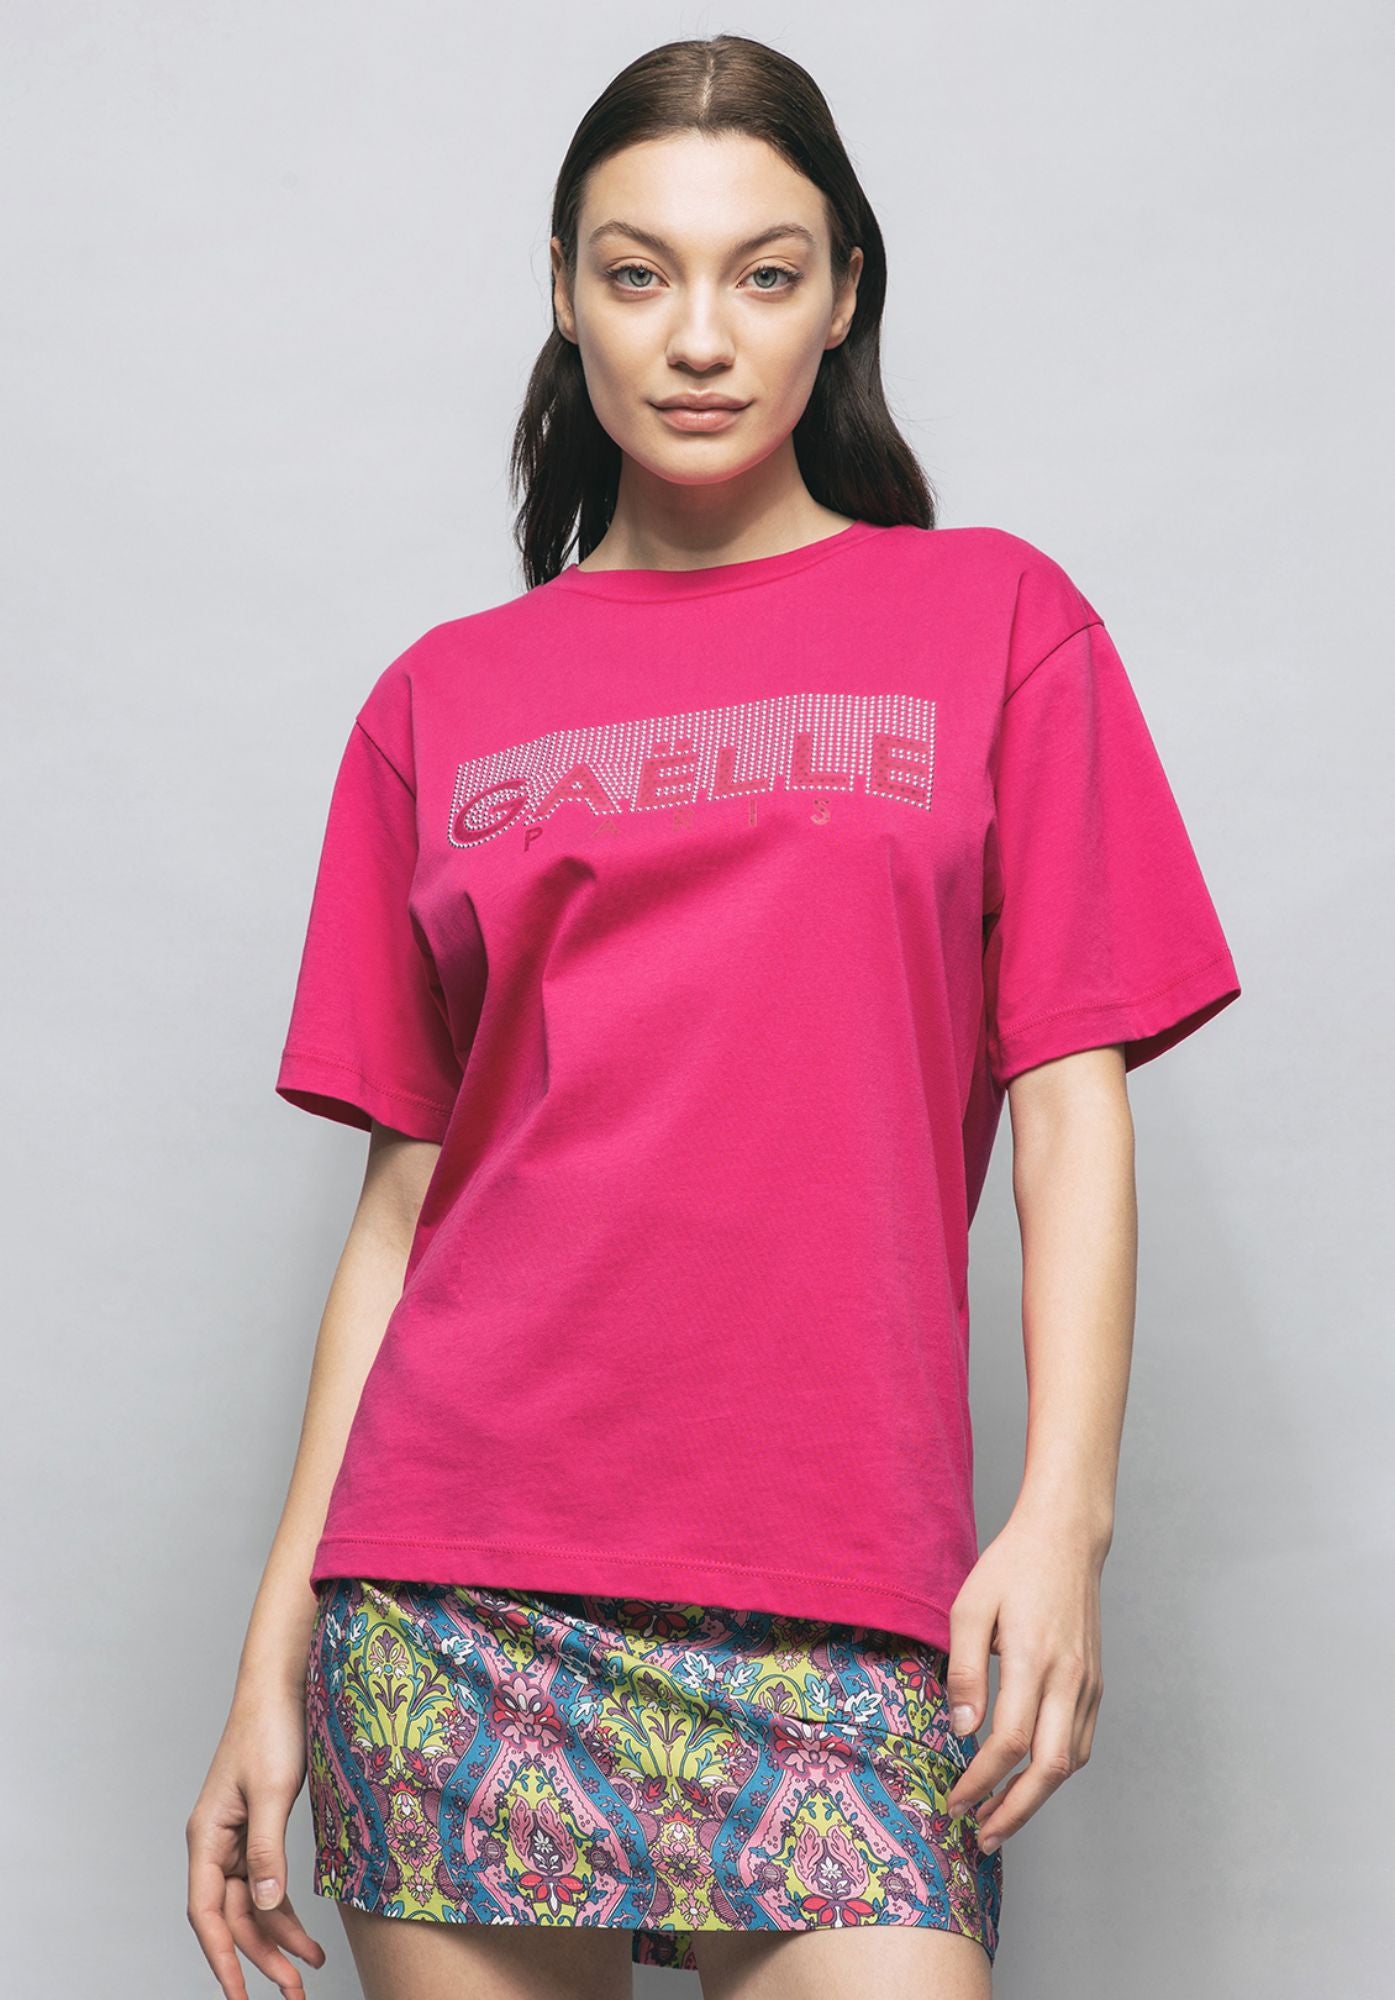 T-shirt Gaelle GBDP17000